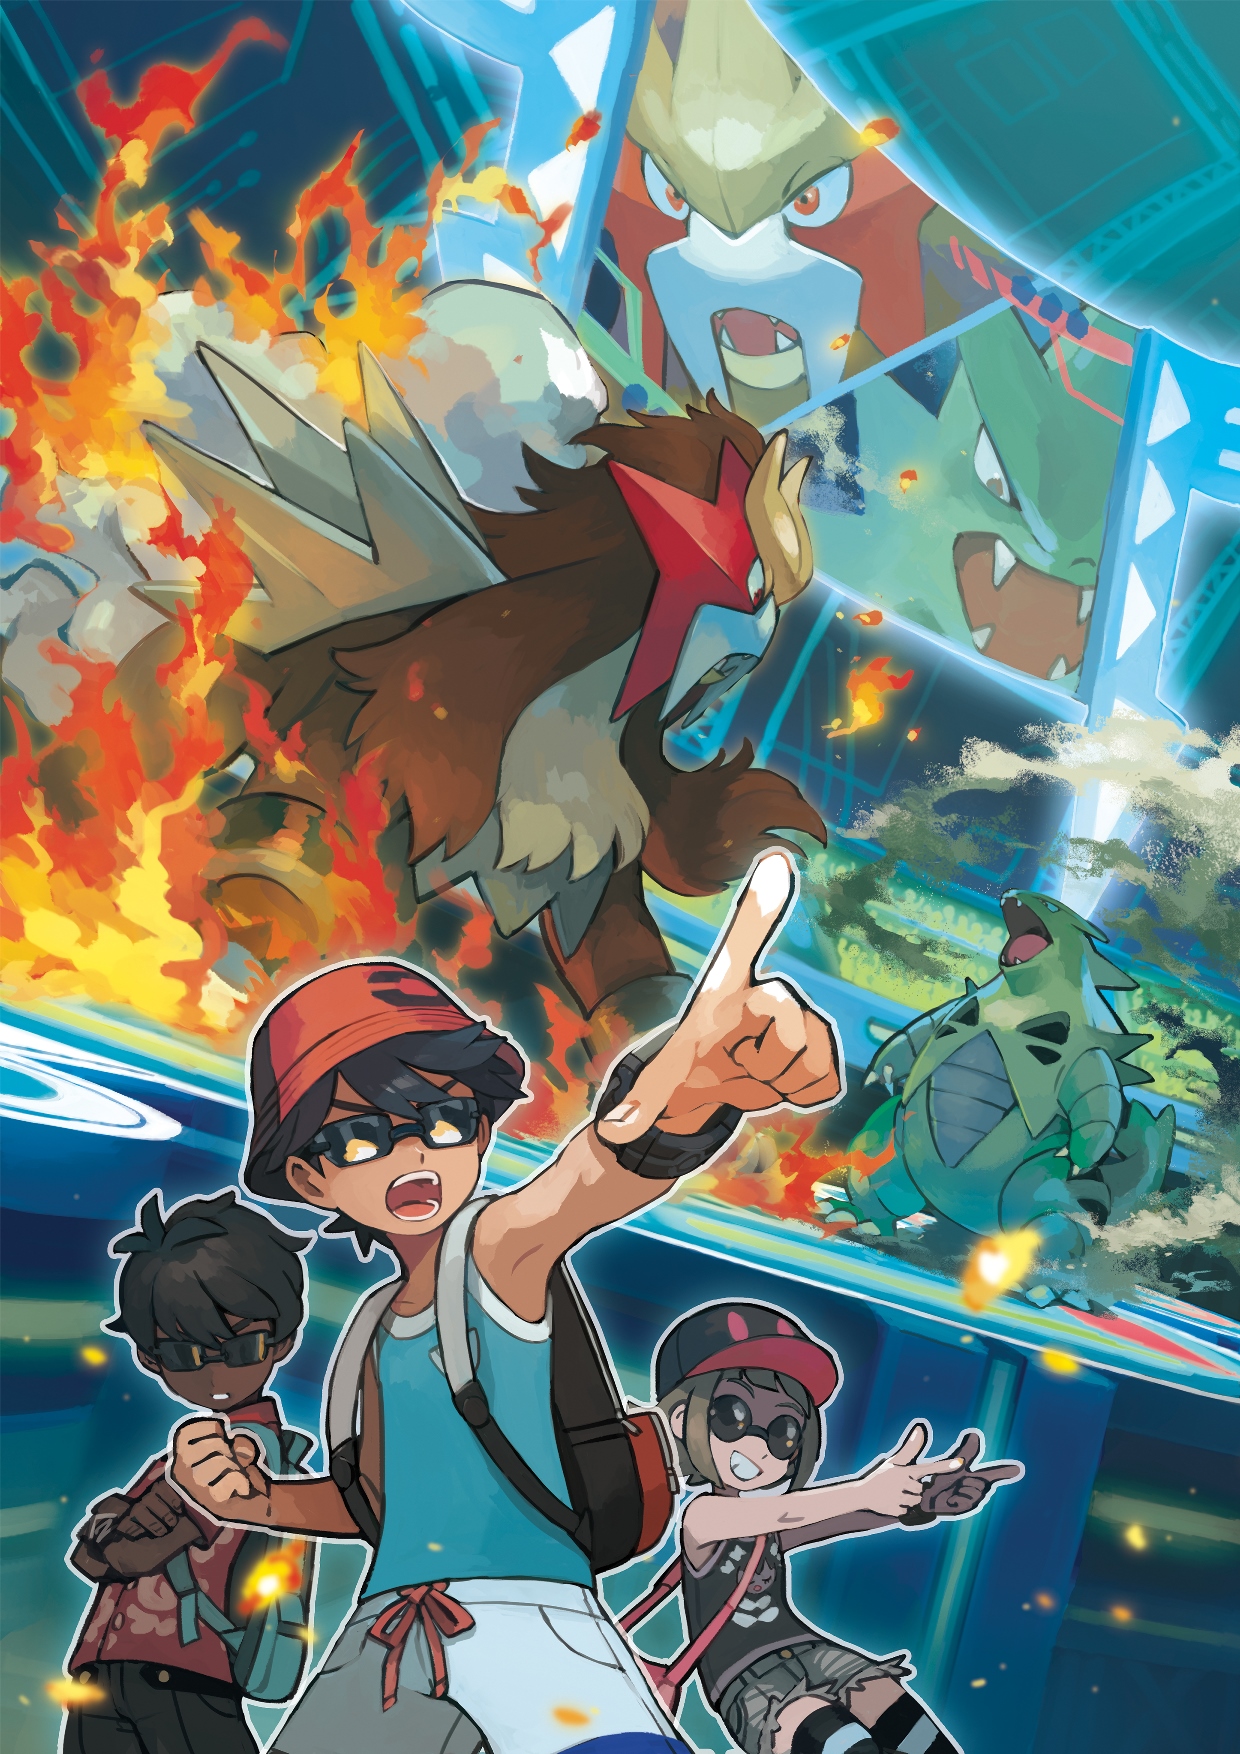 Pokémon Ultra Sun and Moon download cards reveal Team Rocket is in Alola -  Neoseeker